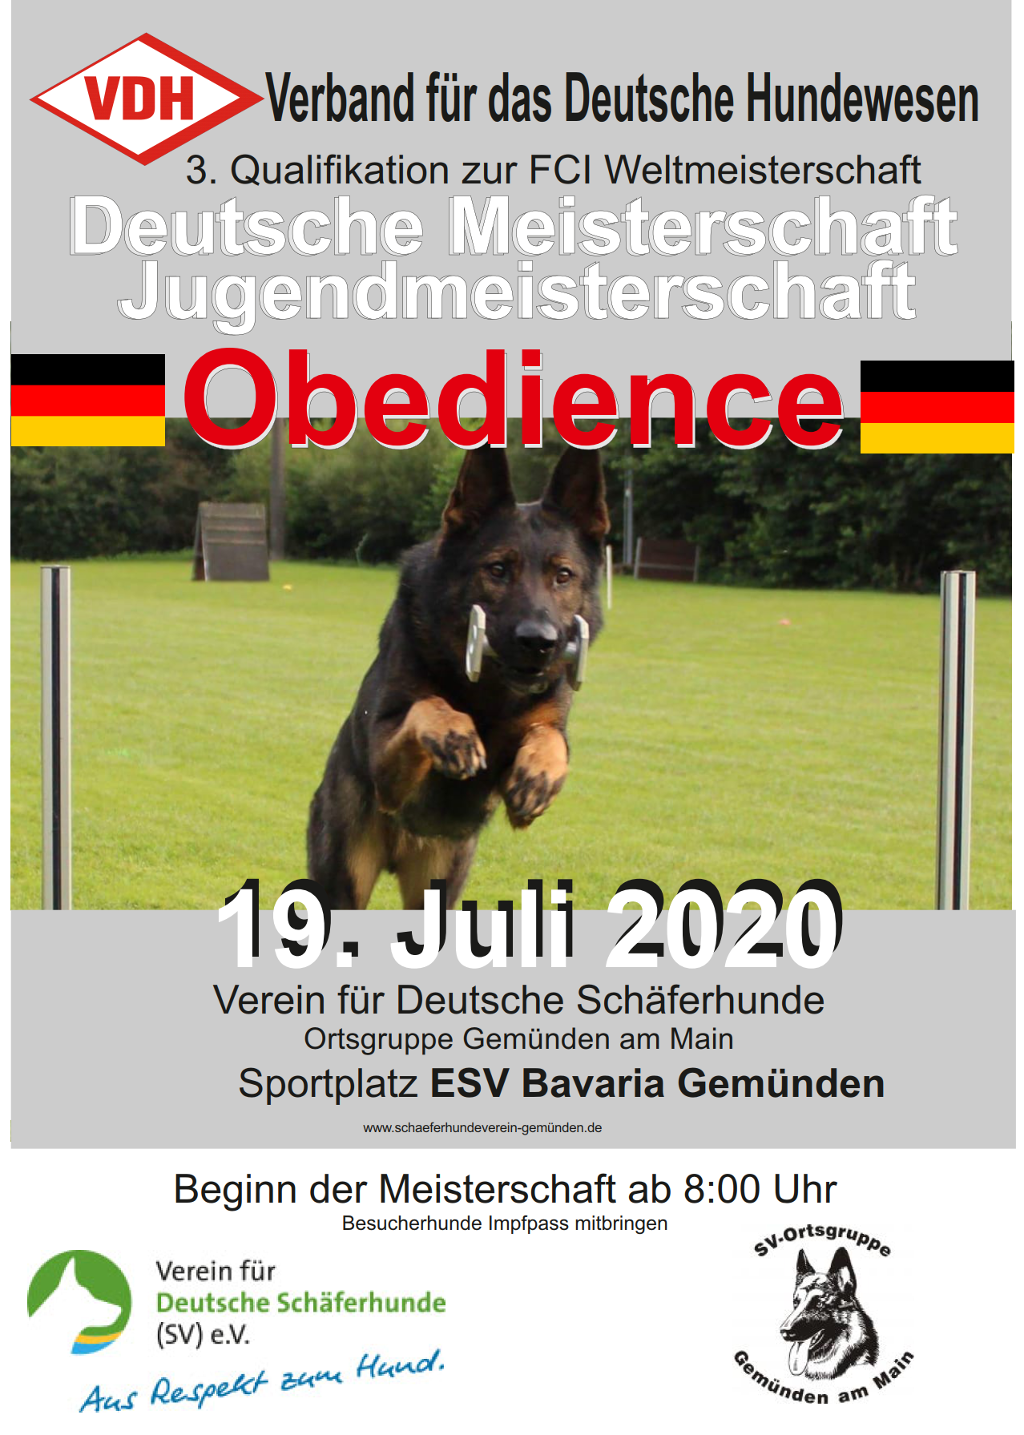 vdh_obedience_plakat_2020_1.png